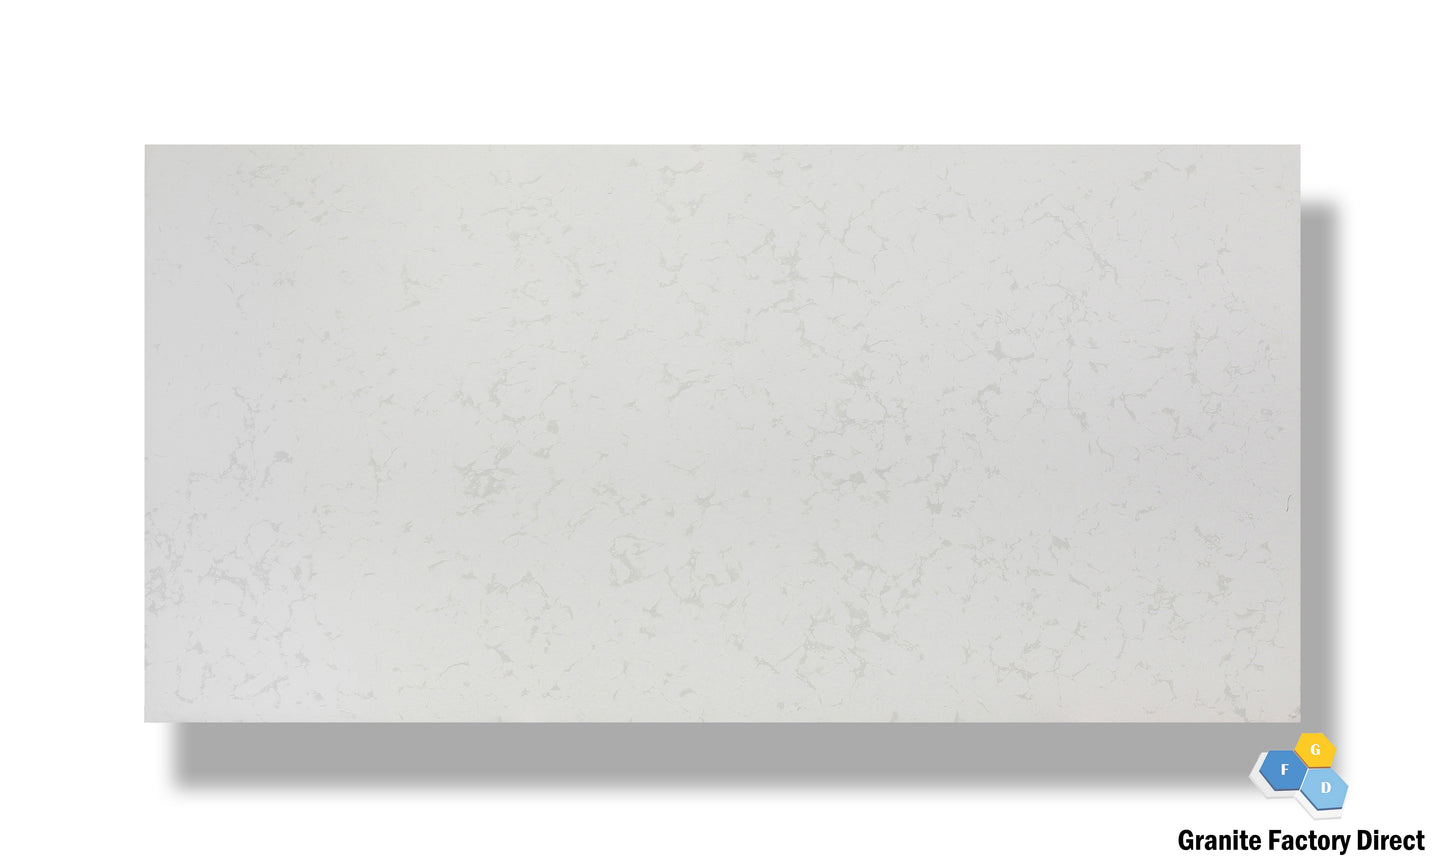 Arco White Quartz GFD917 Countertop Prefab for sale